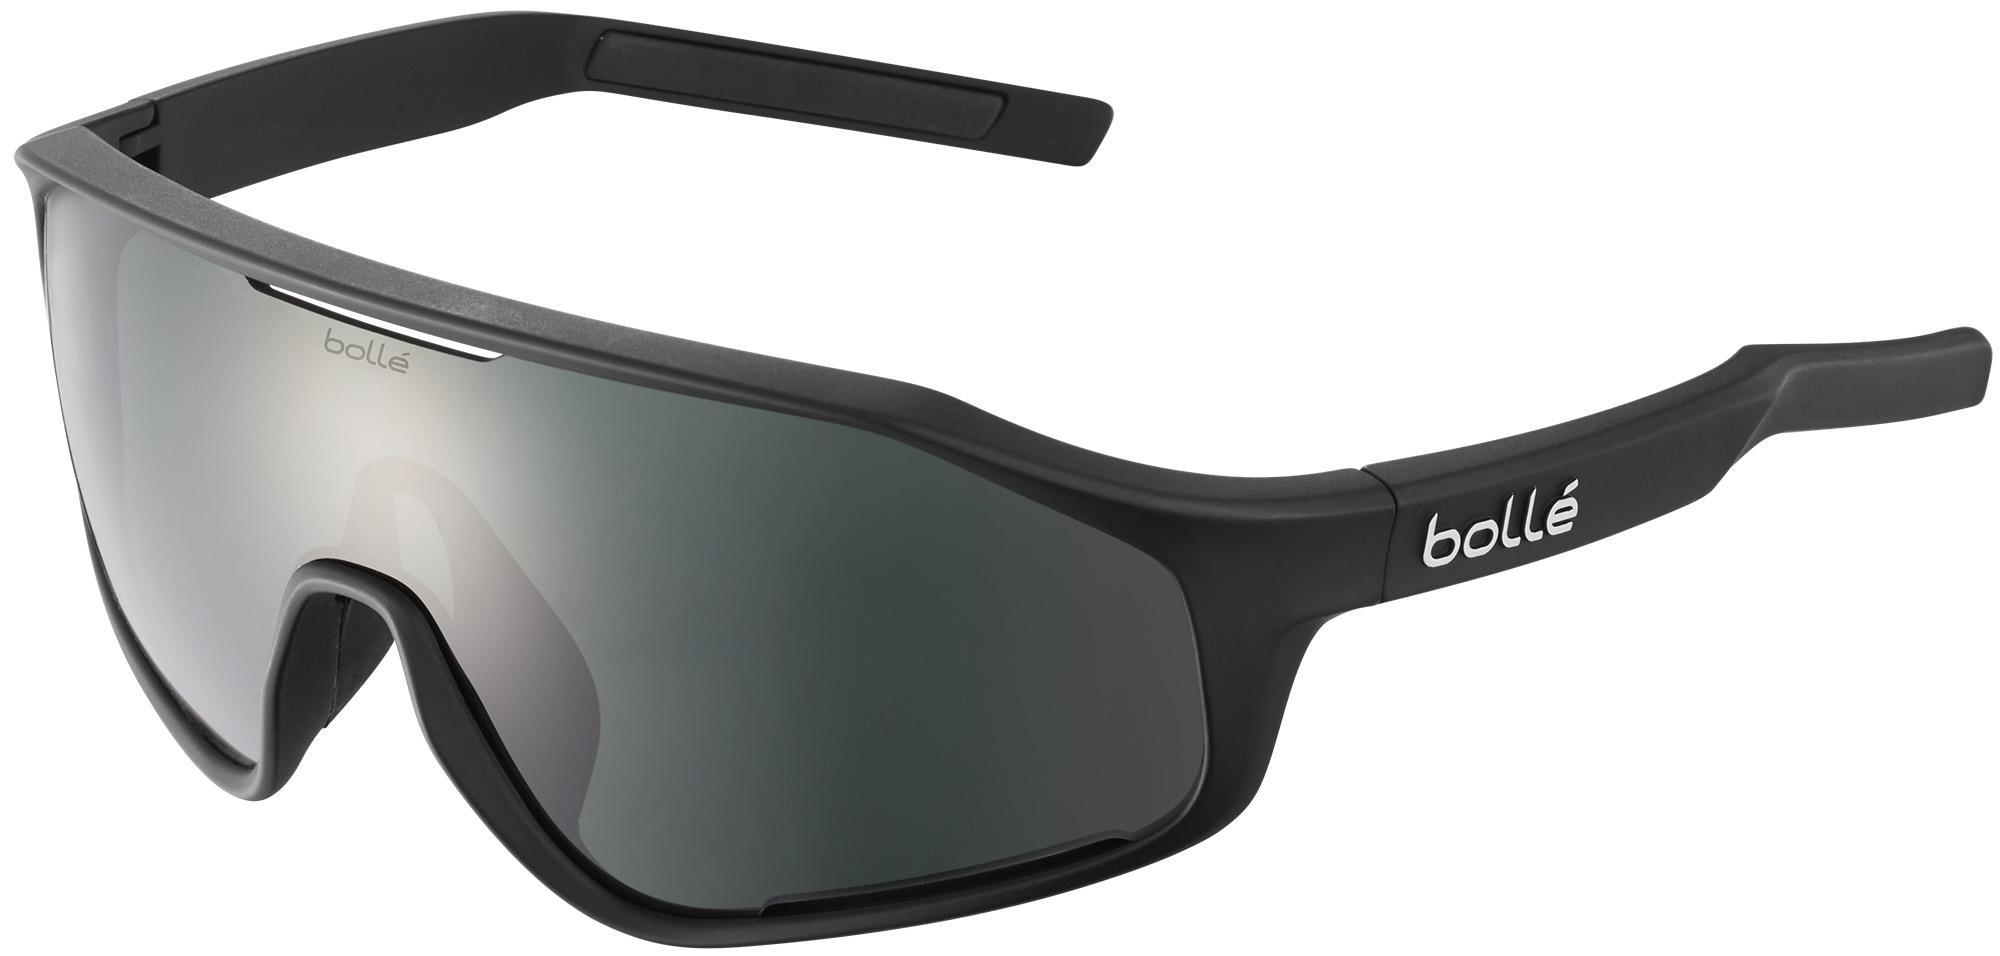 Bolle Shifter Smoke Lens Sunglasses - Matte Black/tns